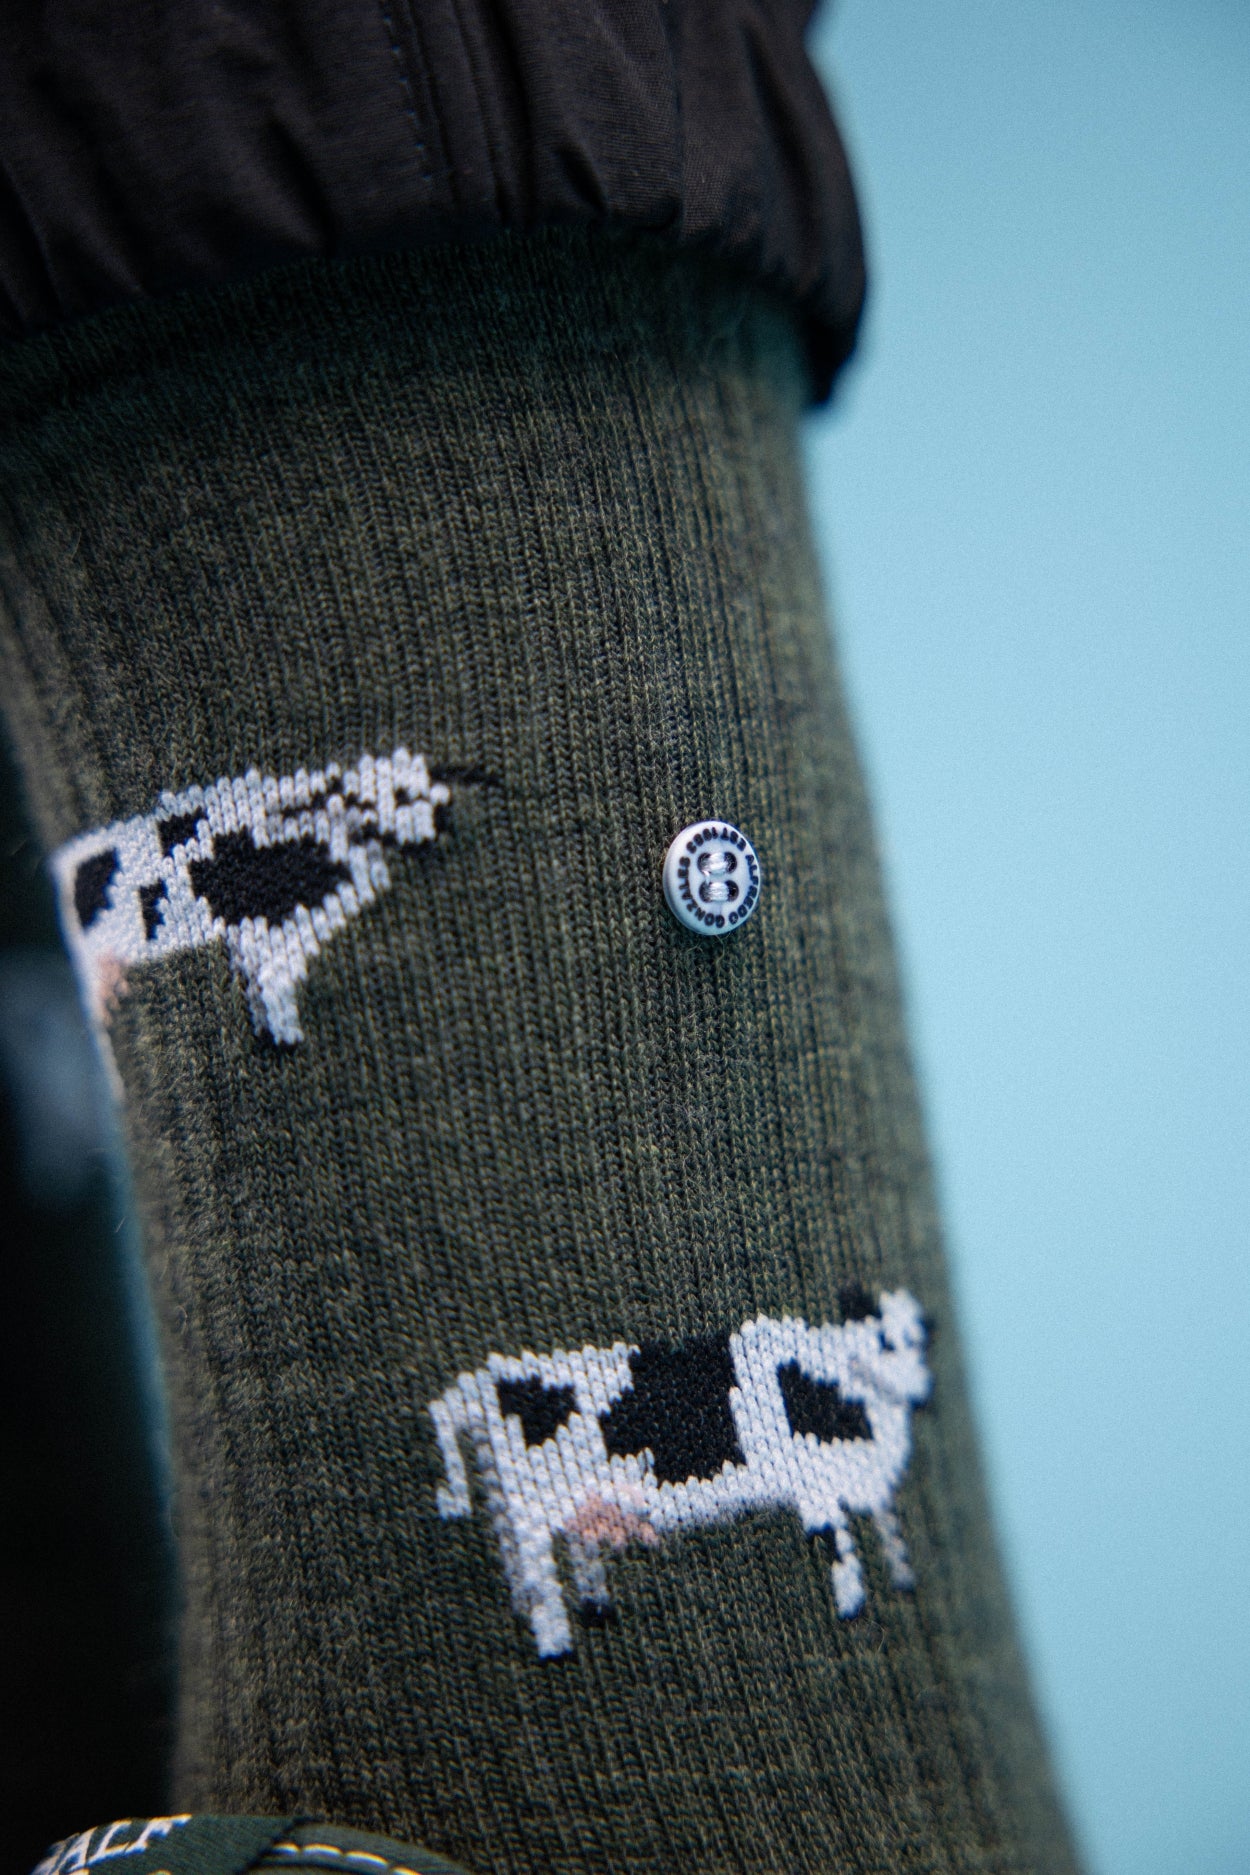 Cows Merino Wool | Army